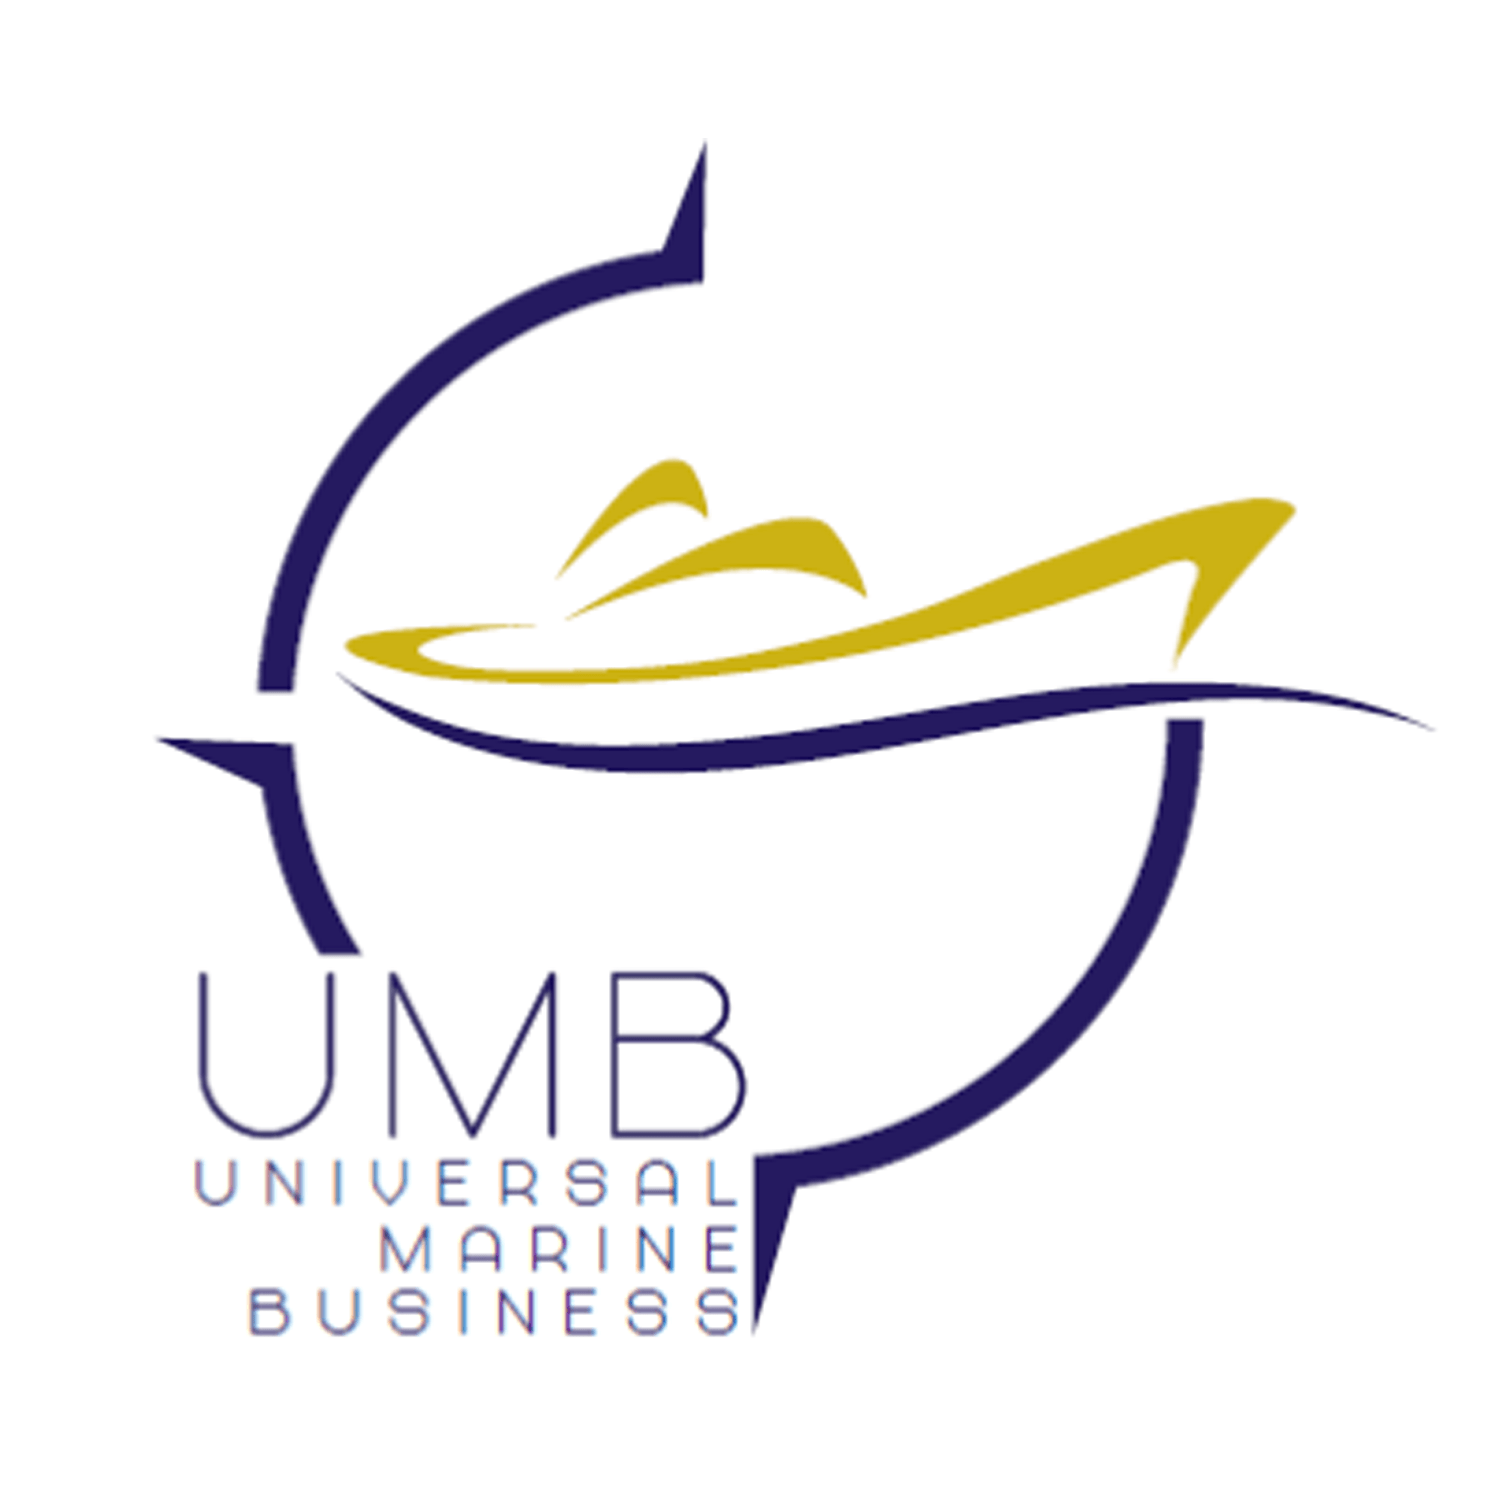 Universal Marine Business - Alternative Business Consulting